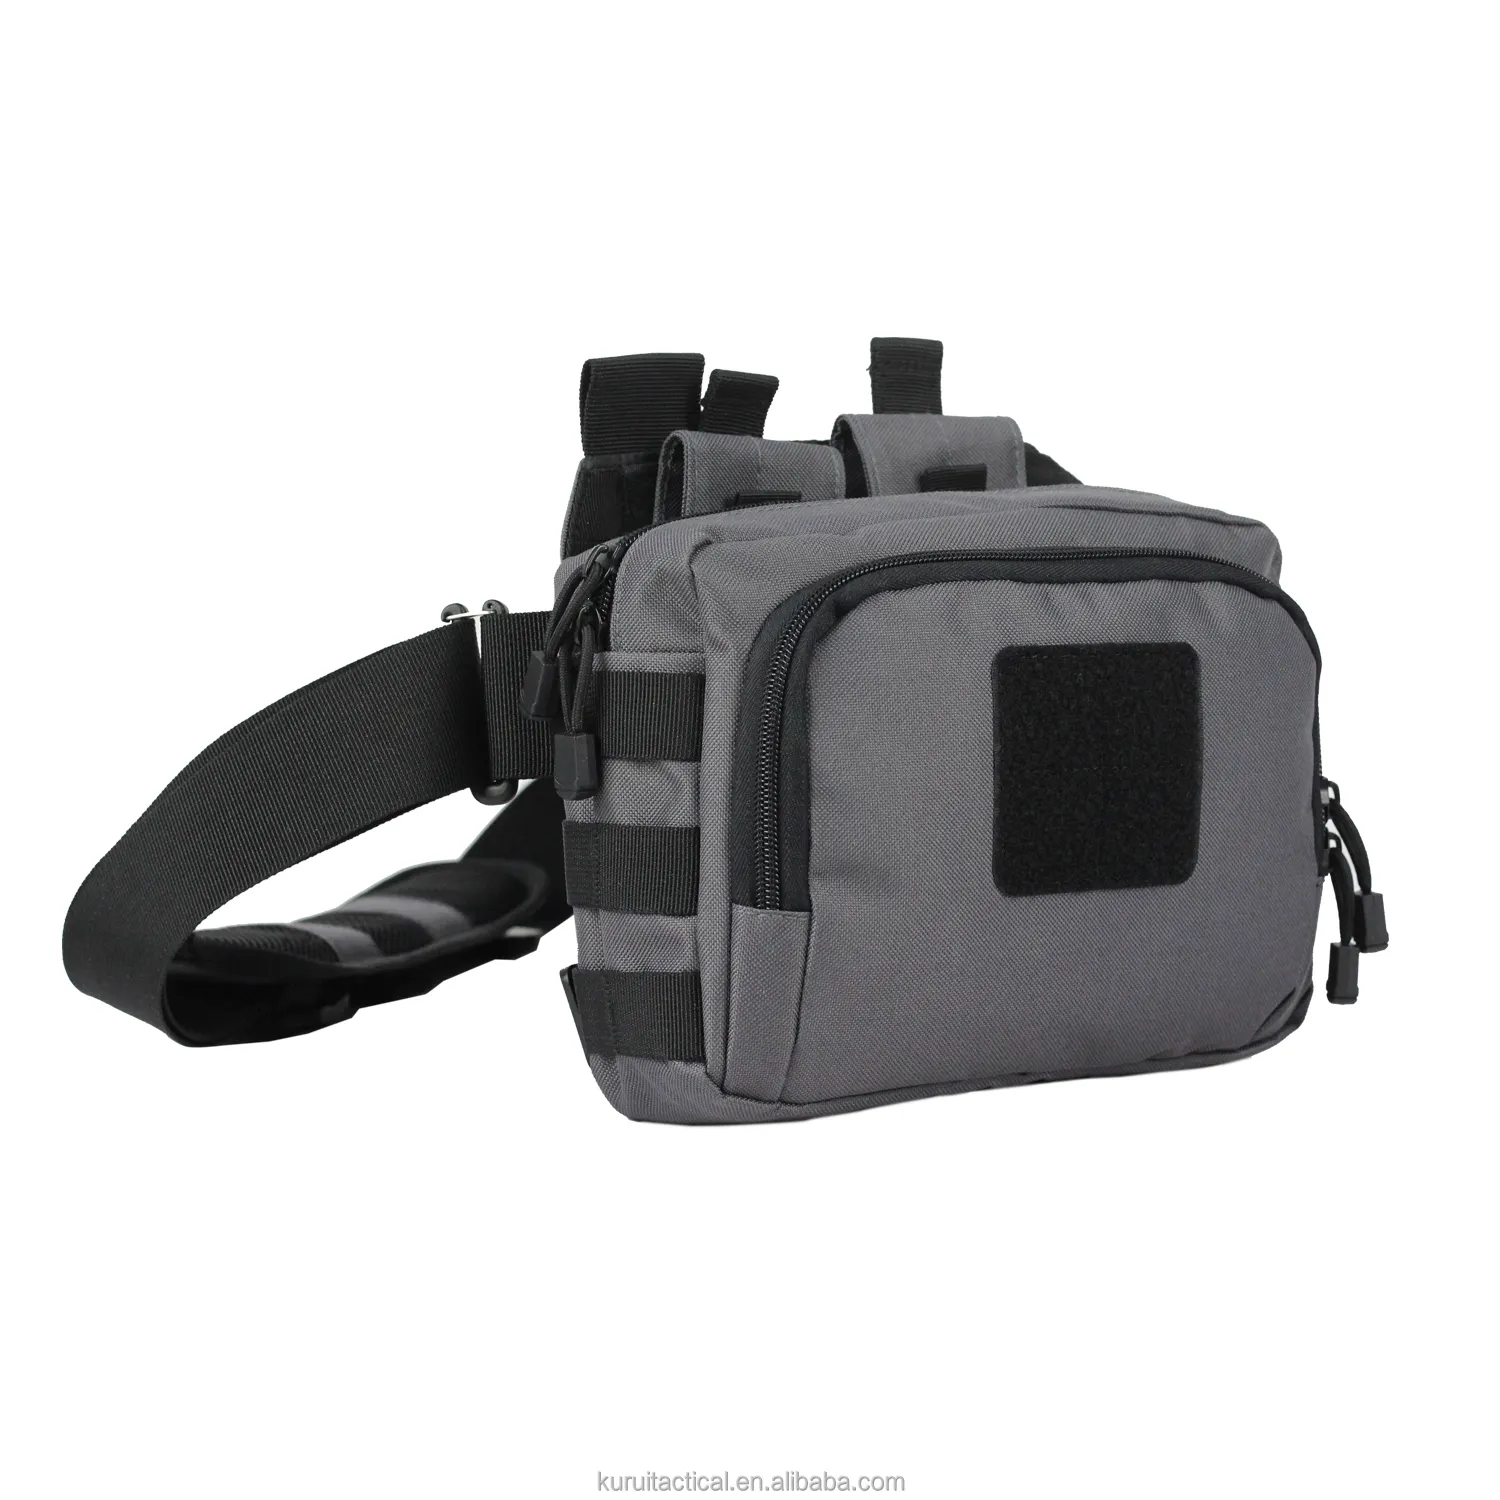 Kurui water resistant tactical sling bag small oxford EDC pack shoulder chest bag OEM